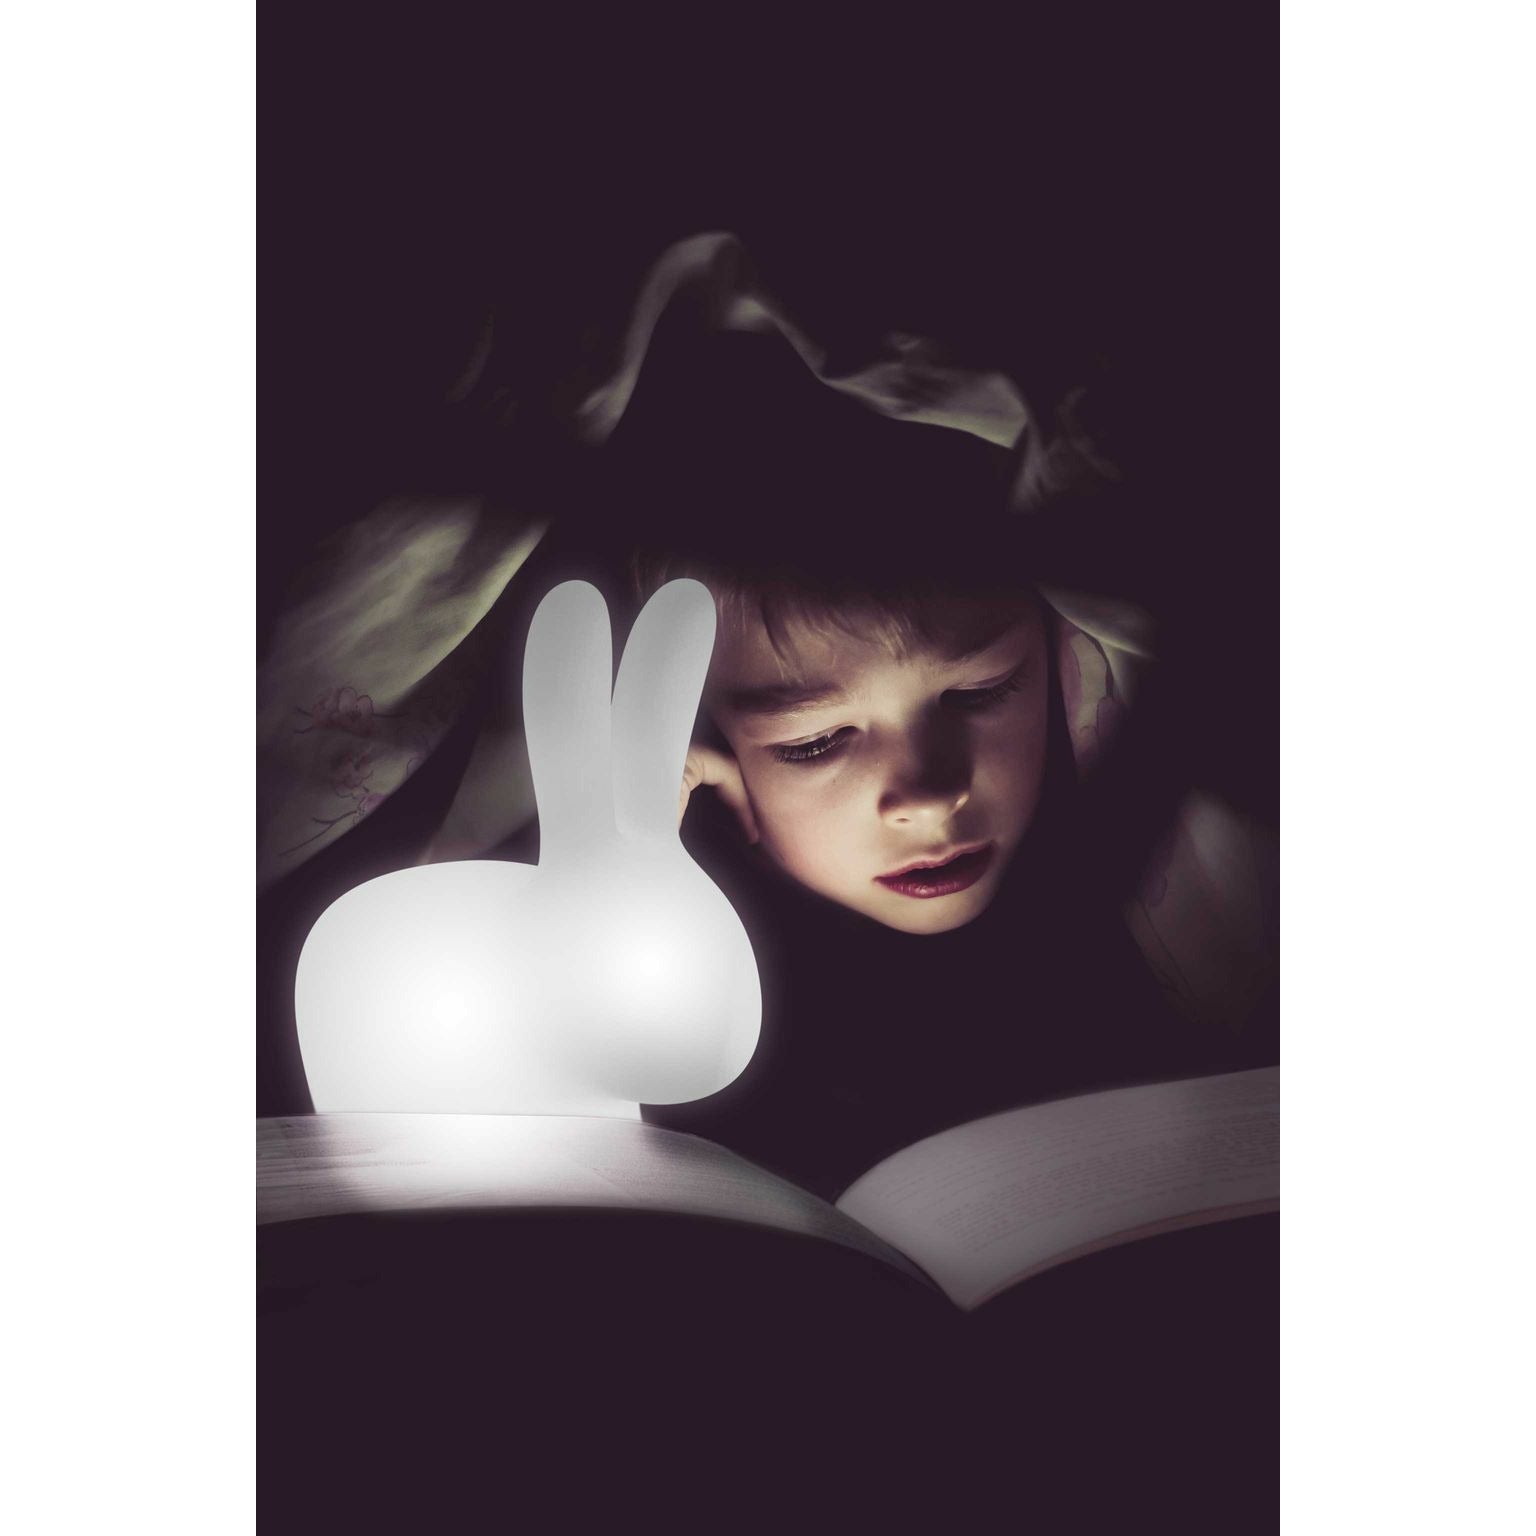 Qeeboo LED -licht van konijnen herstartbaar, XS